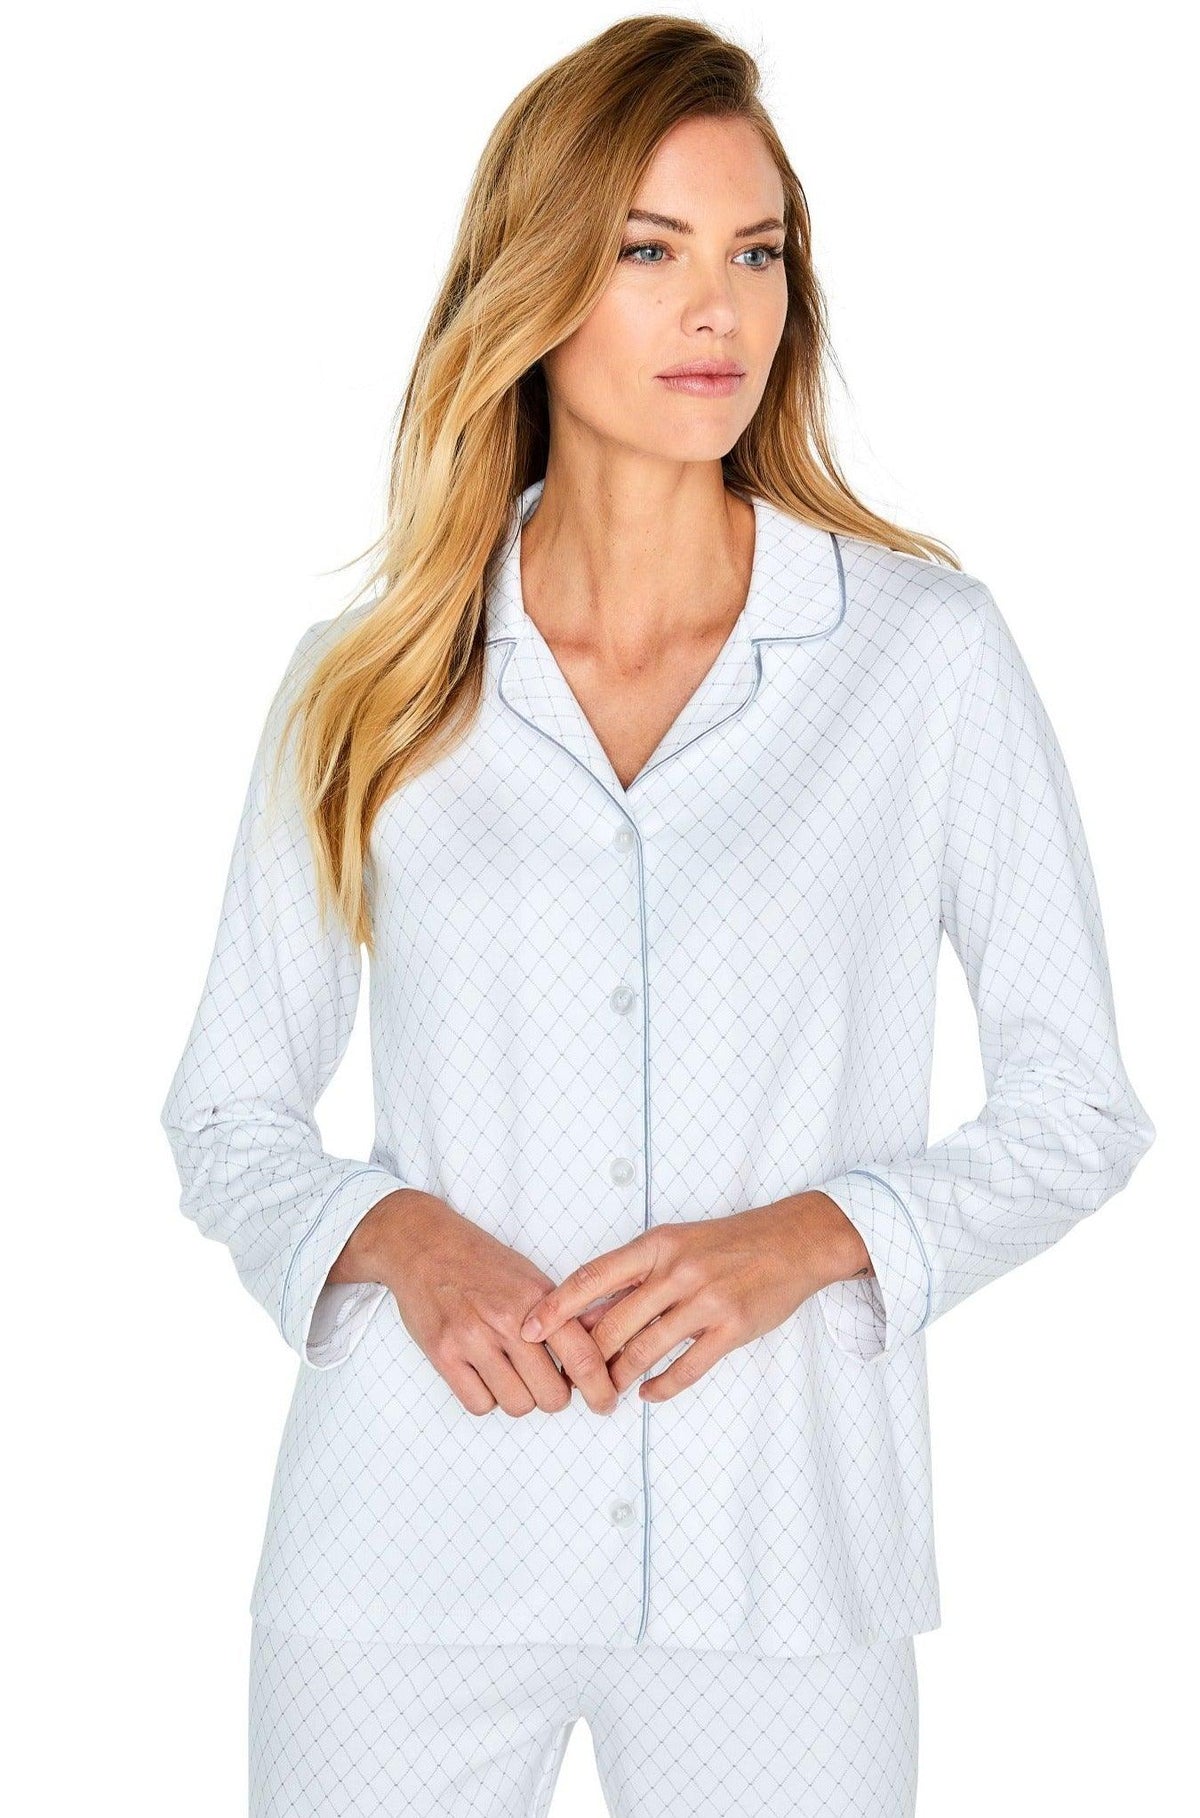 Audrey Long Sleeve PJ Set - Marelle Sleepwear